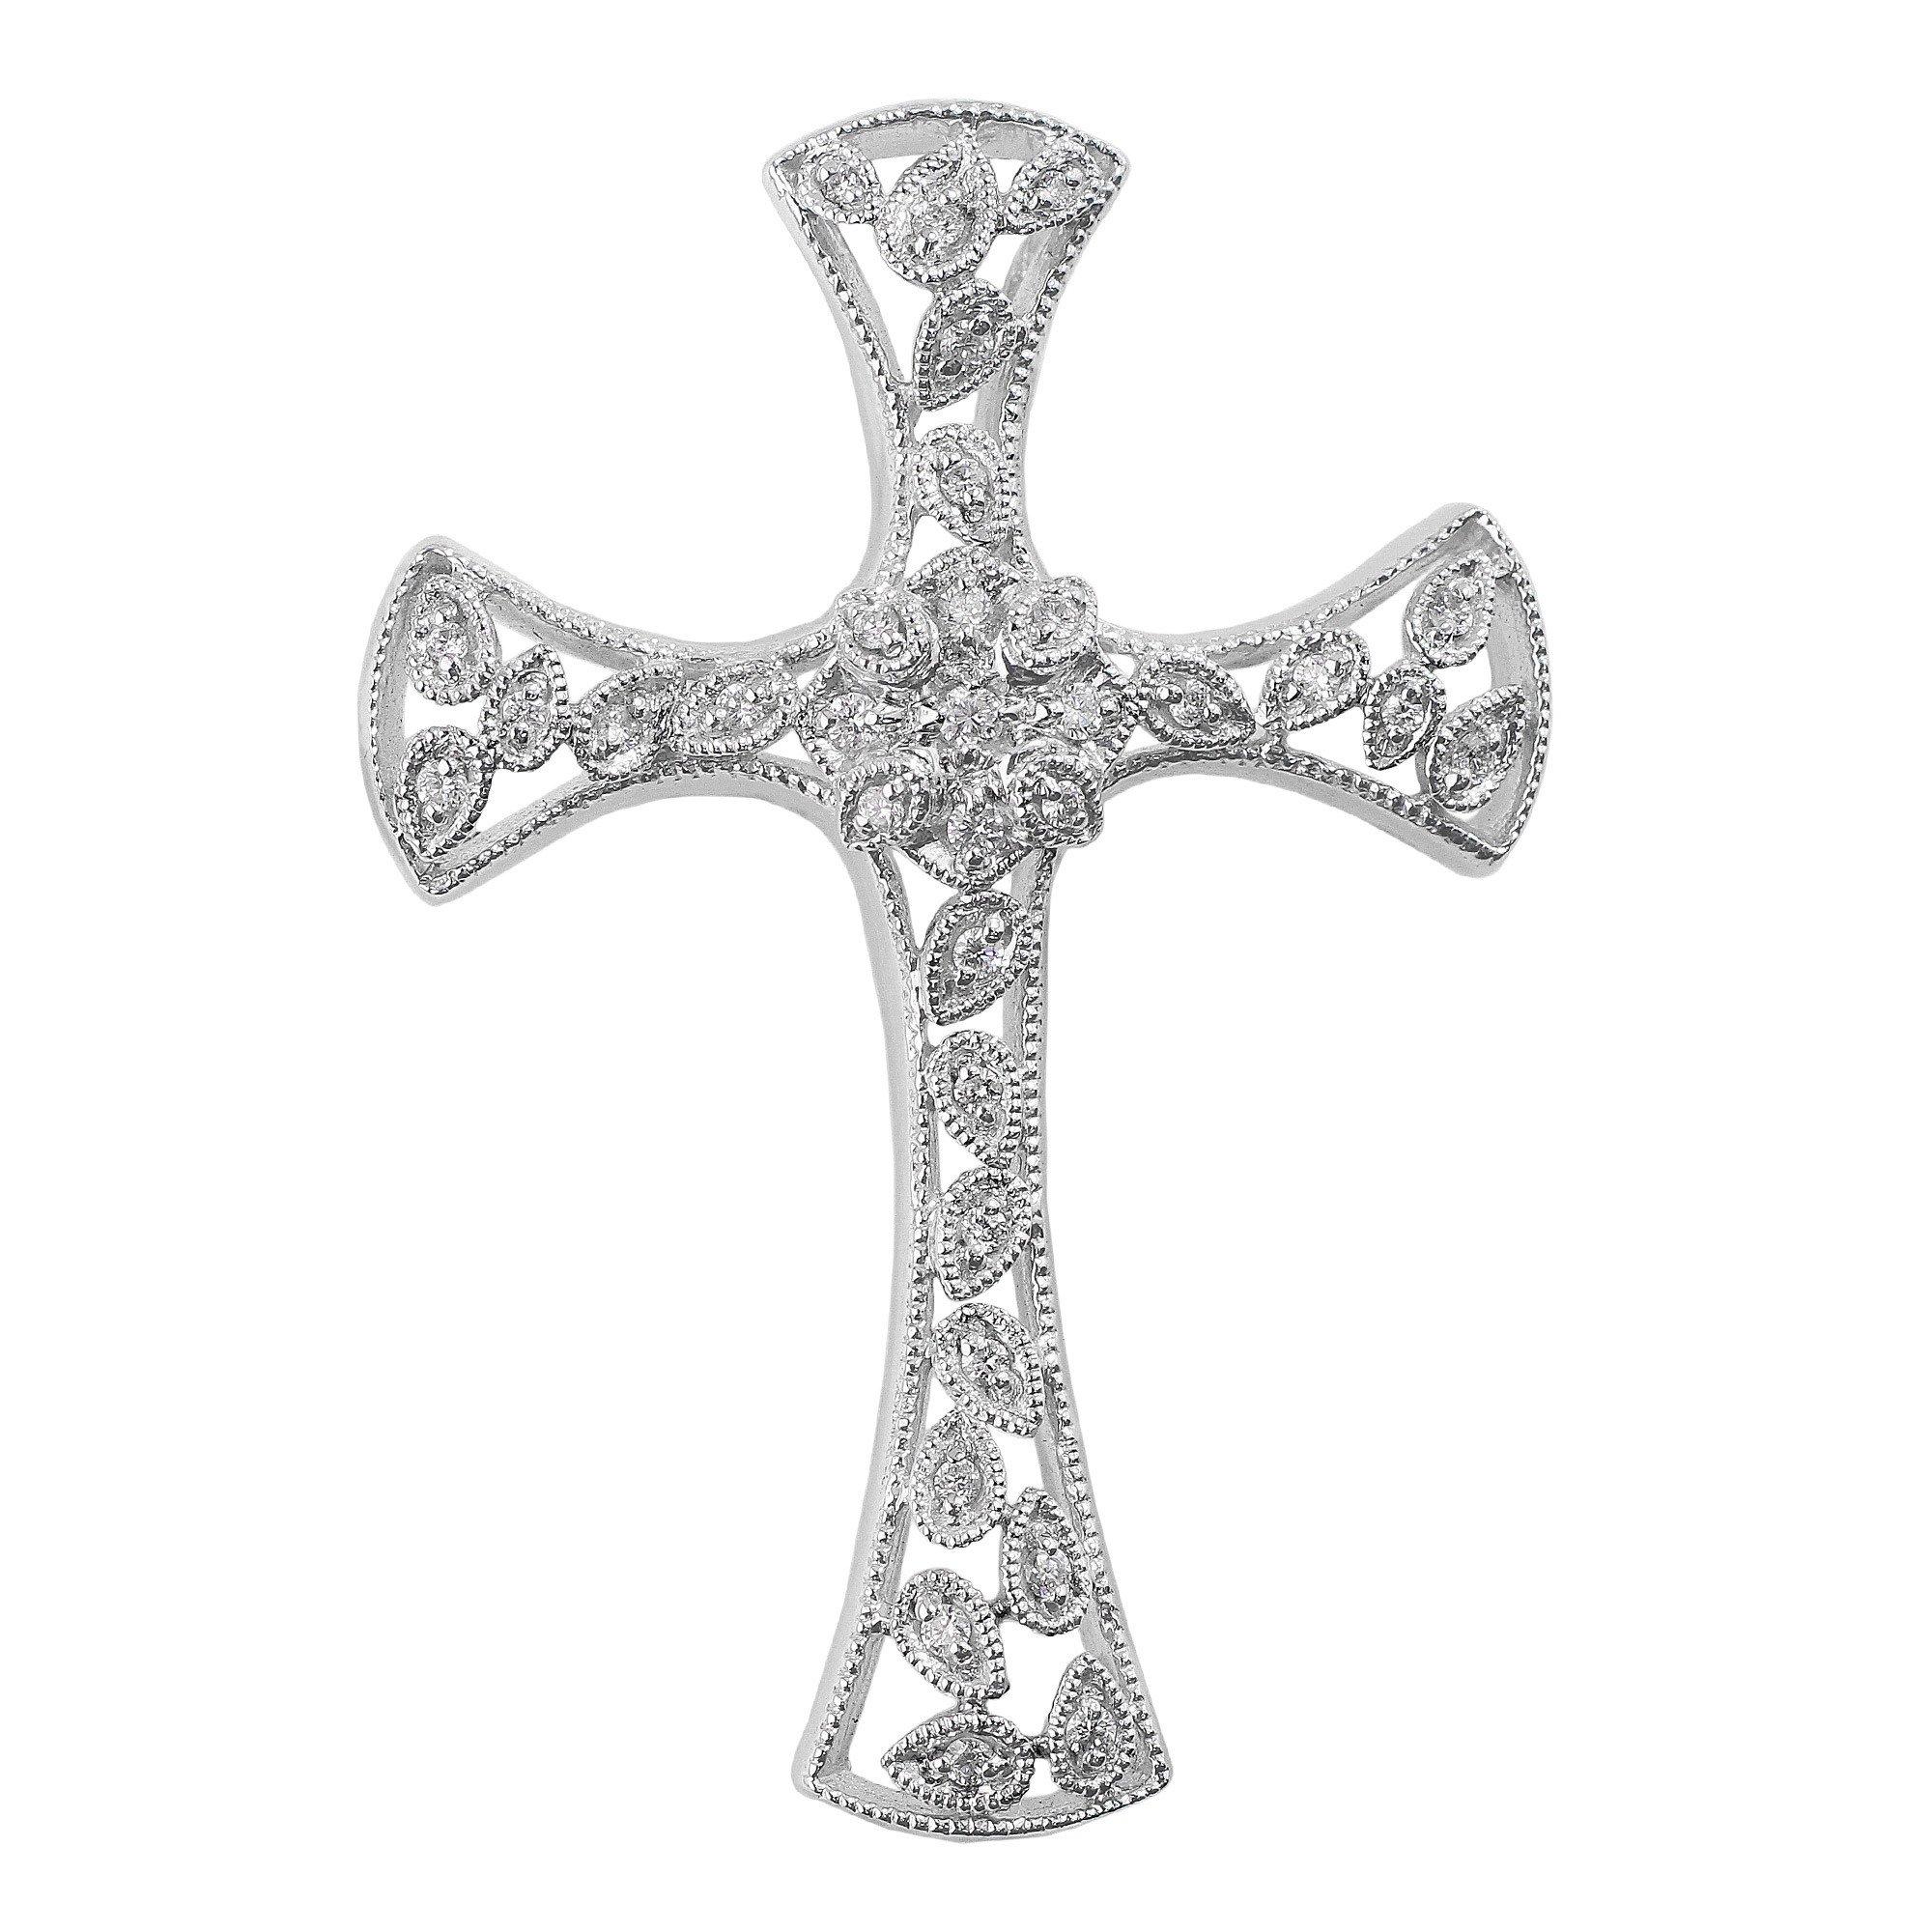 Filigree Diamond Cross. 18k white gold filigree cross with diamonds totaling 0.15 carat total weight.